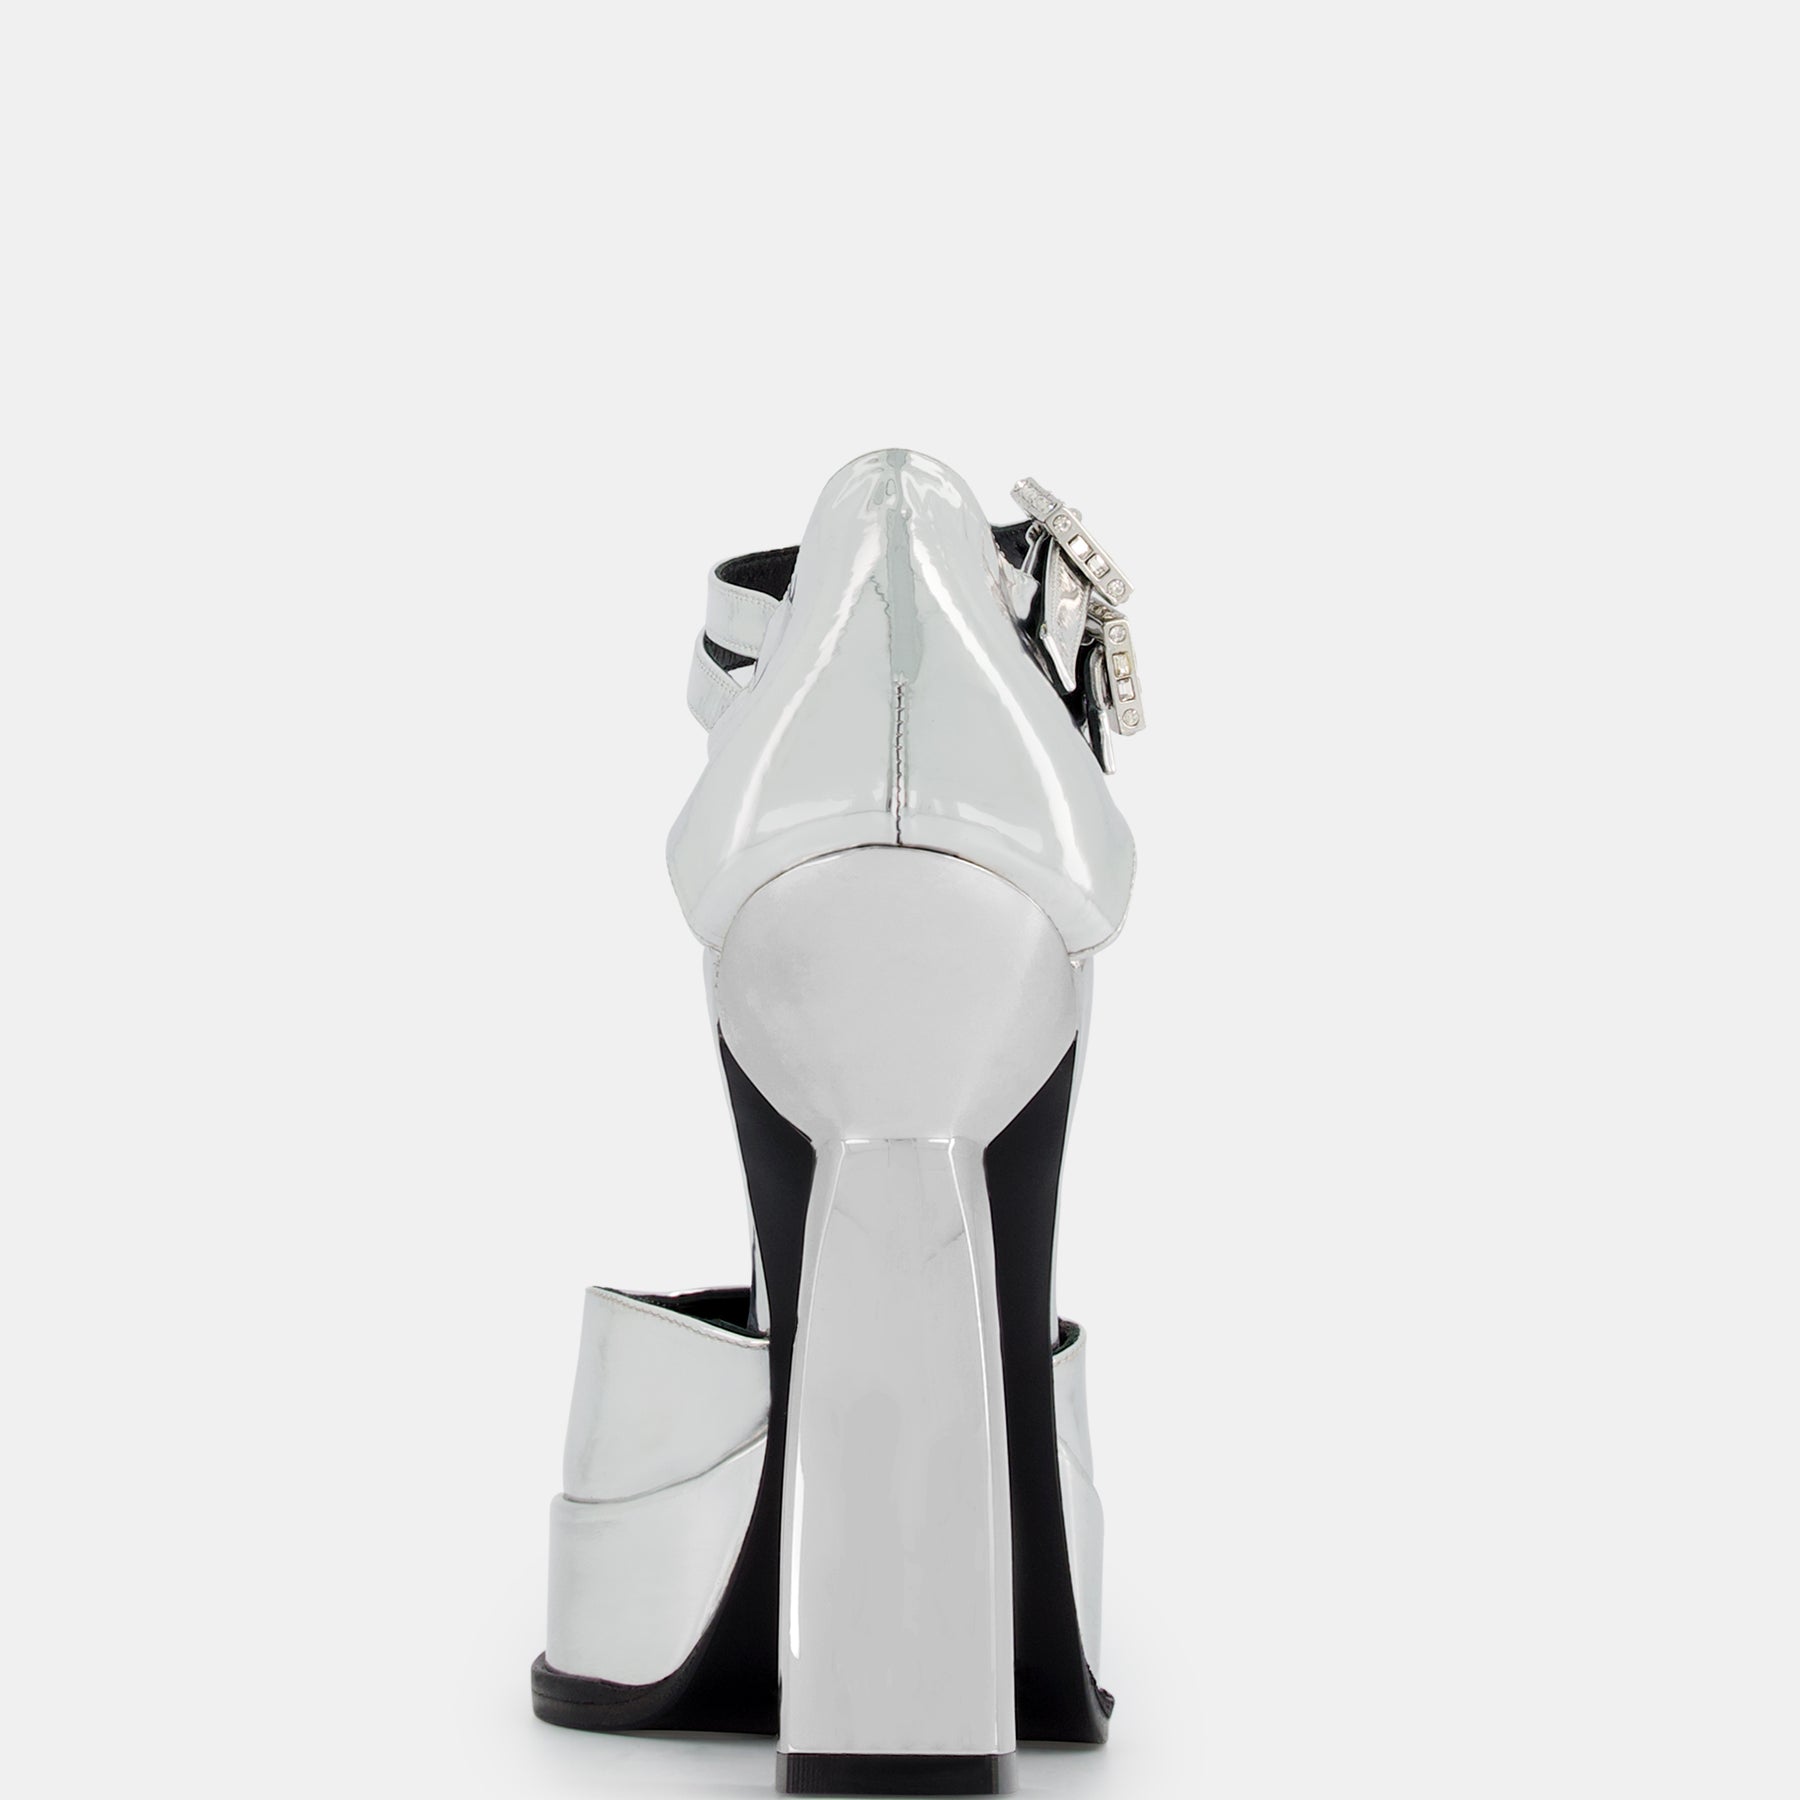 HSMQHJWE Heel Shoes for Women Summer Platform Sandals Open Toe Fashion  Cutout Caged Shoes With Zipper - Walmart.com